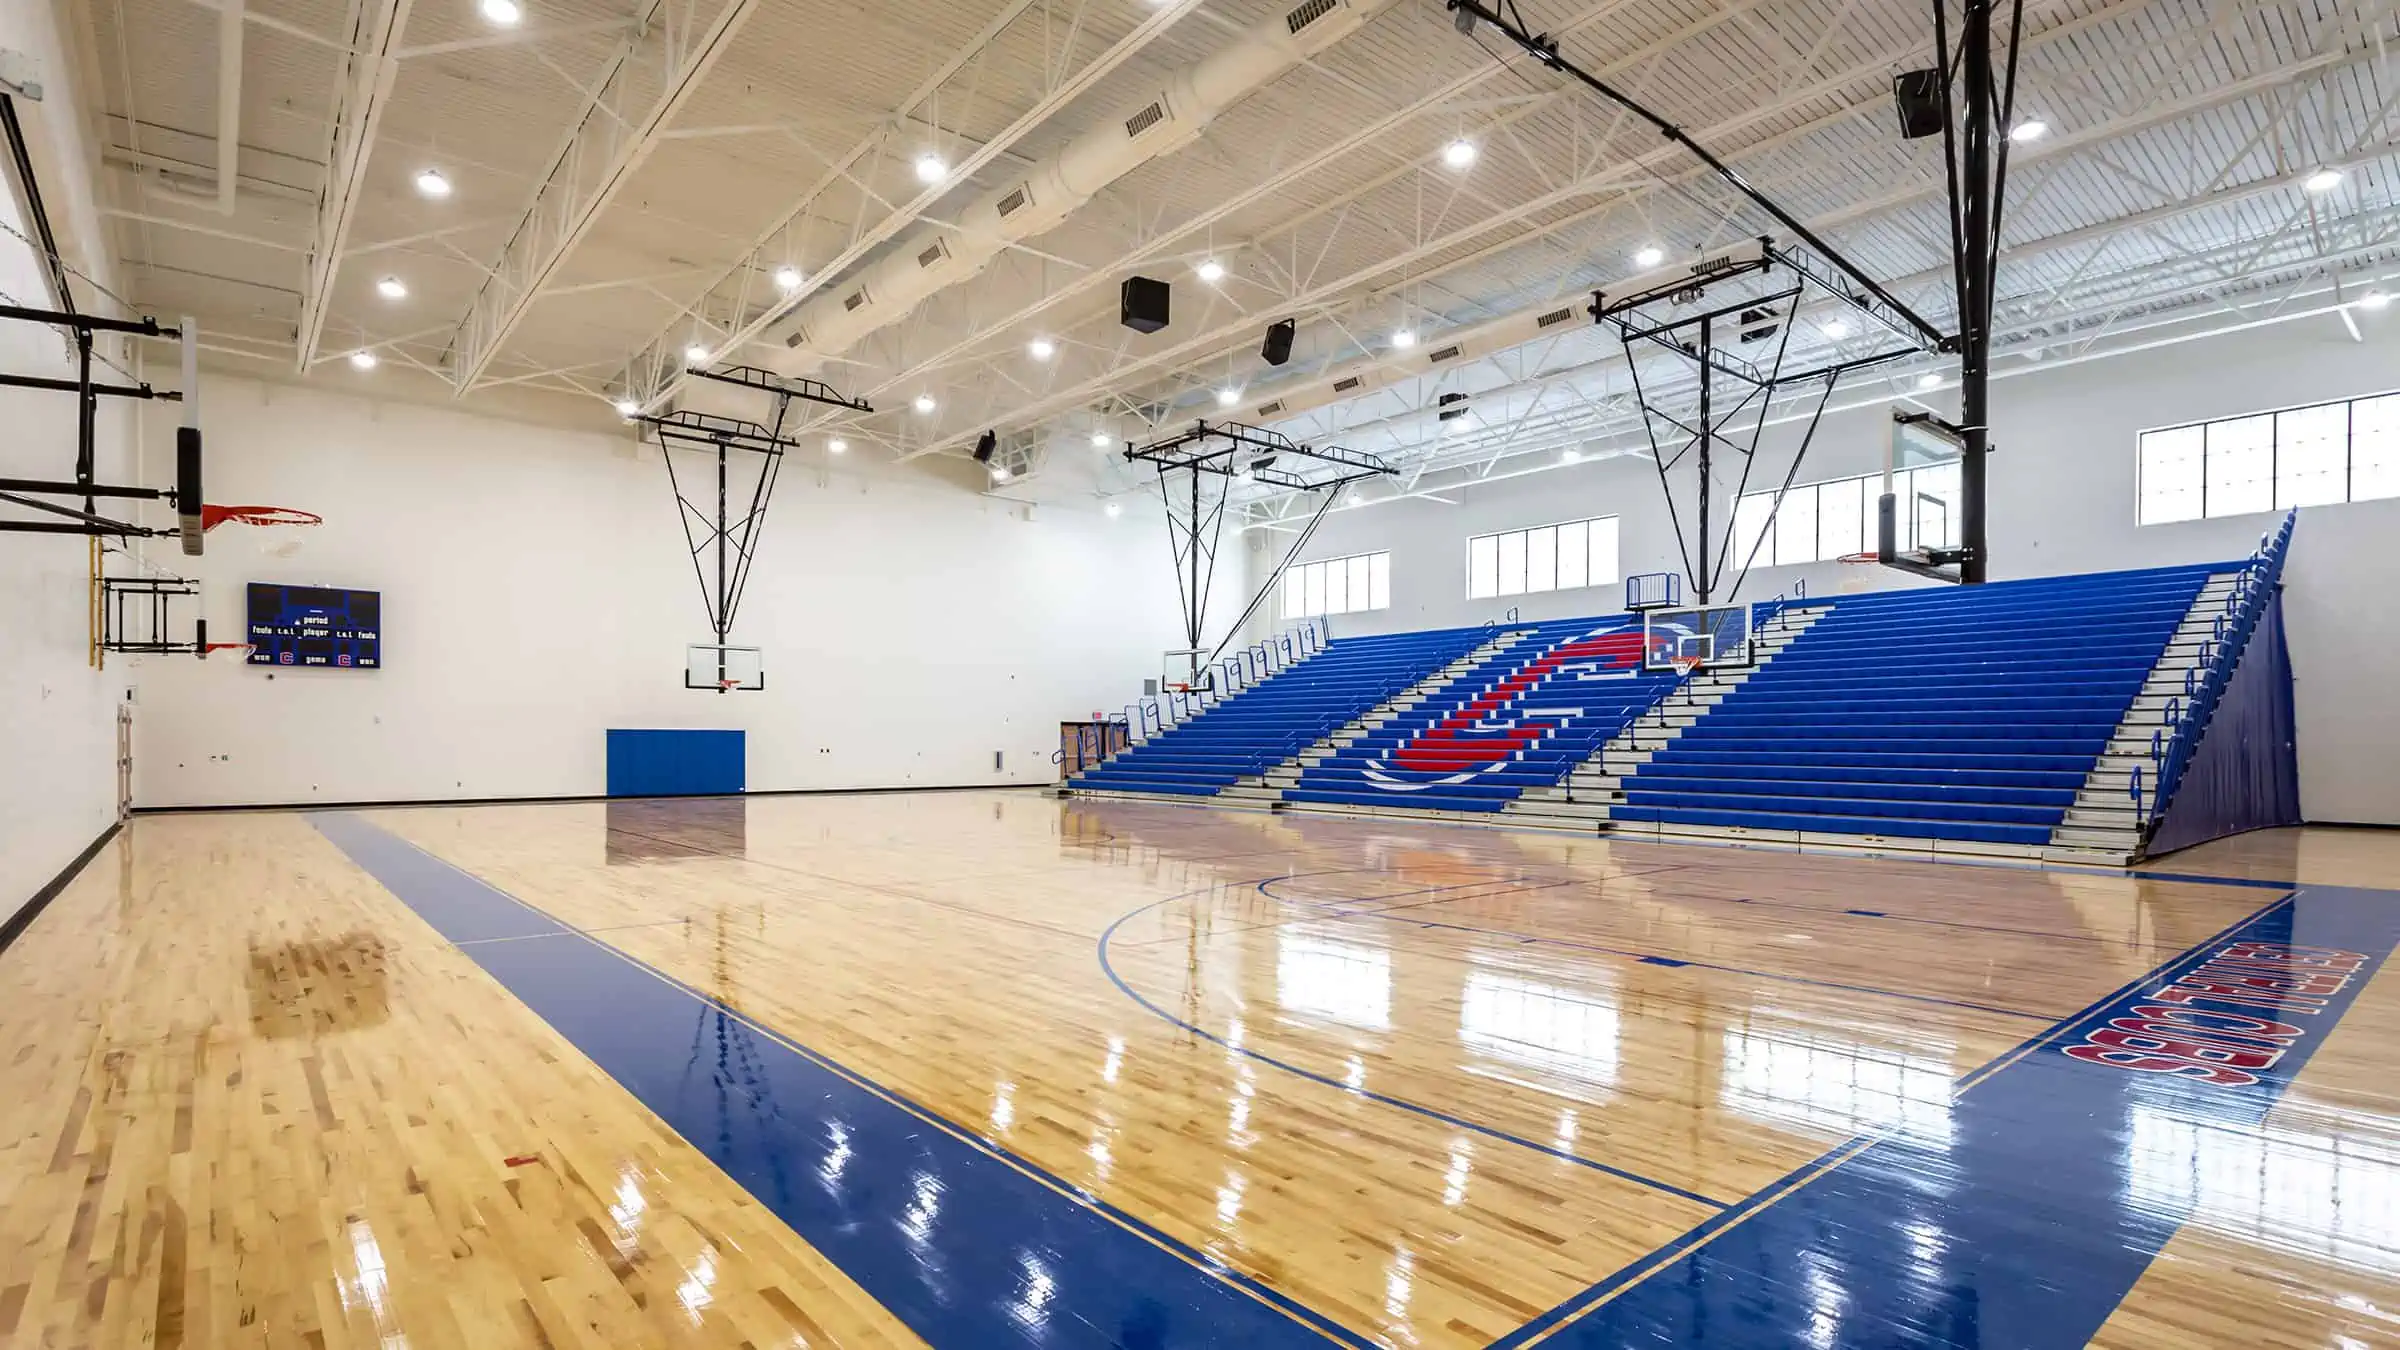 Moore Public Schools - Central Jr. High School Gymnasium Basketball Court and Bleachers